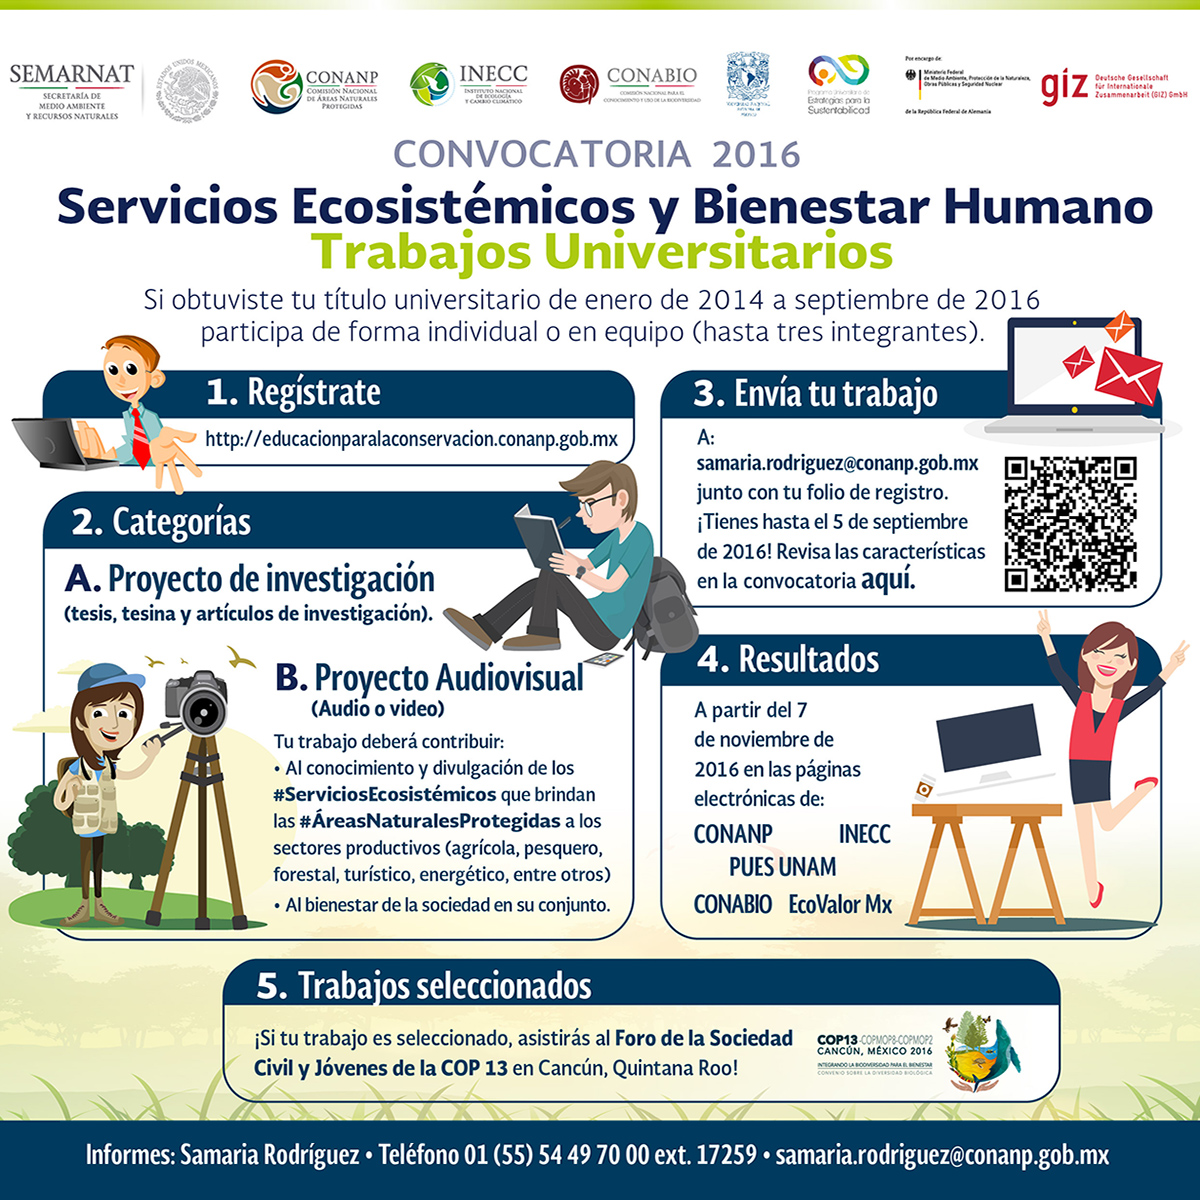 /cms/uploads/image/file/183178/Infografia_Tarabajos_Universitarios_1200px-01.jpg.jpeg